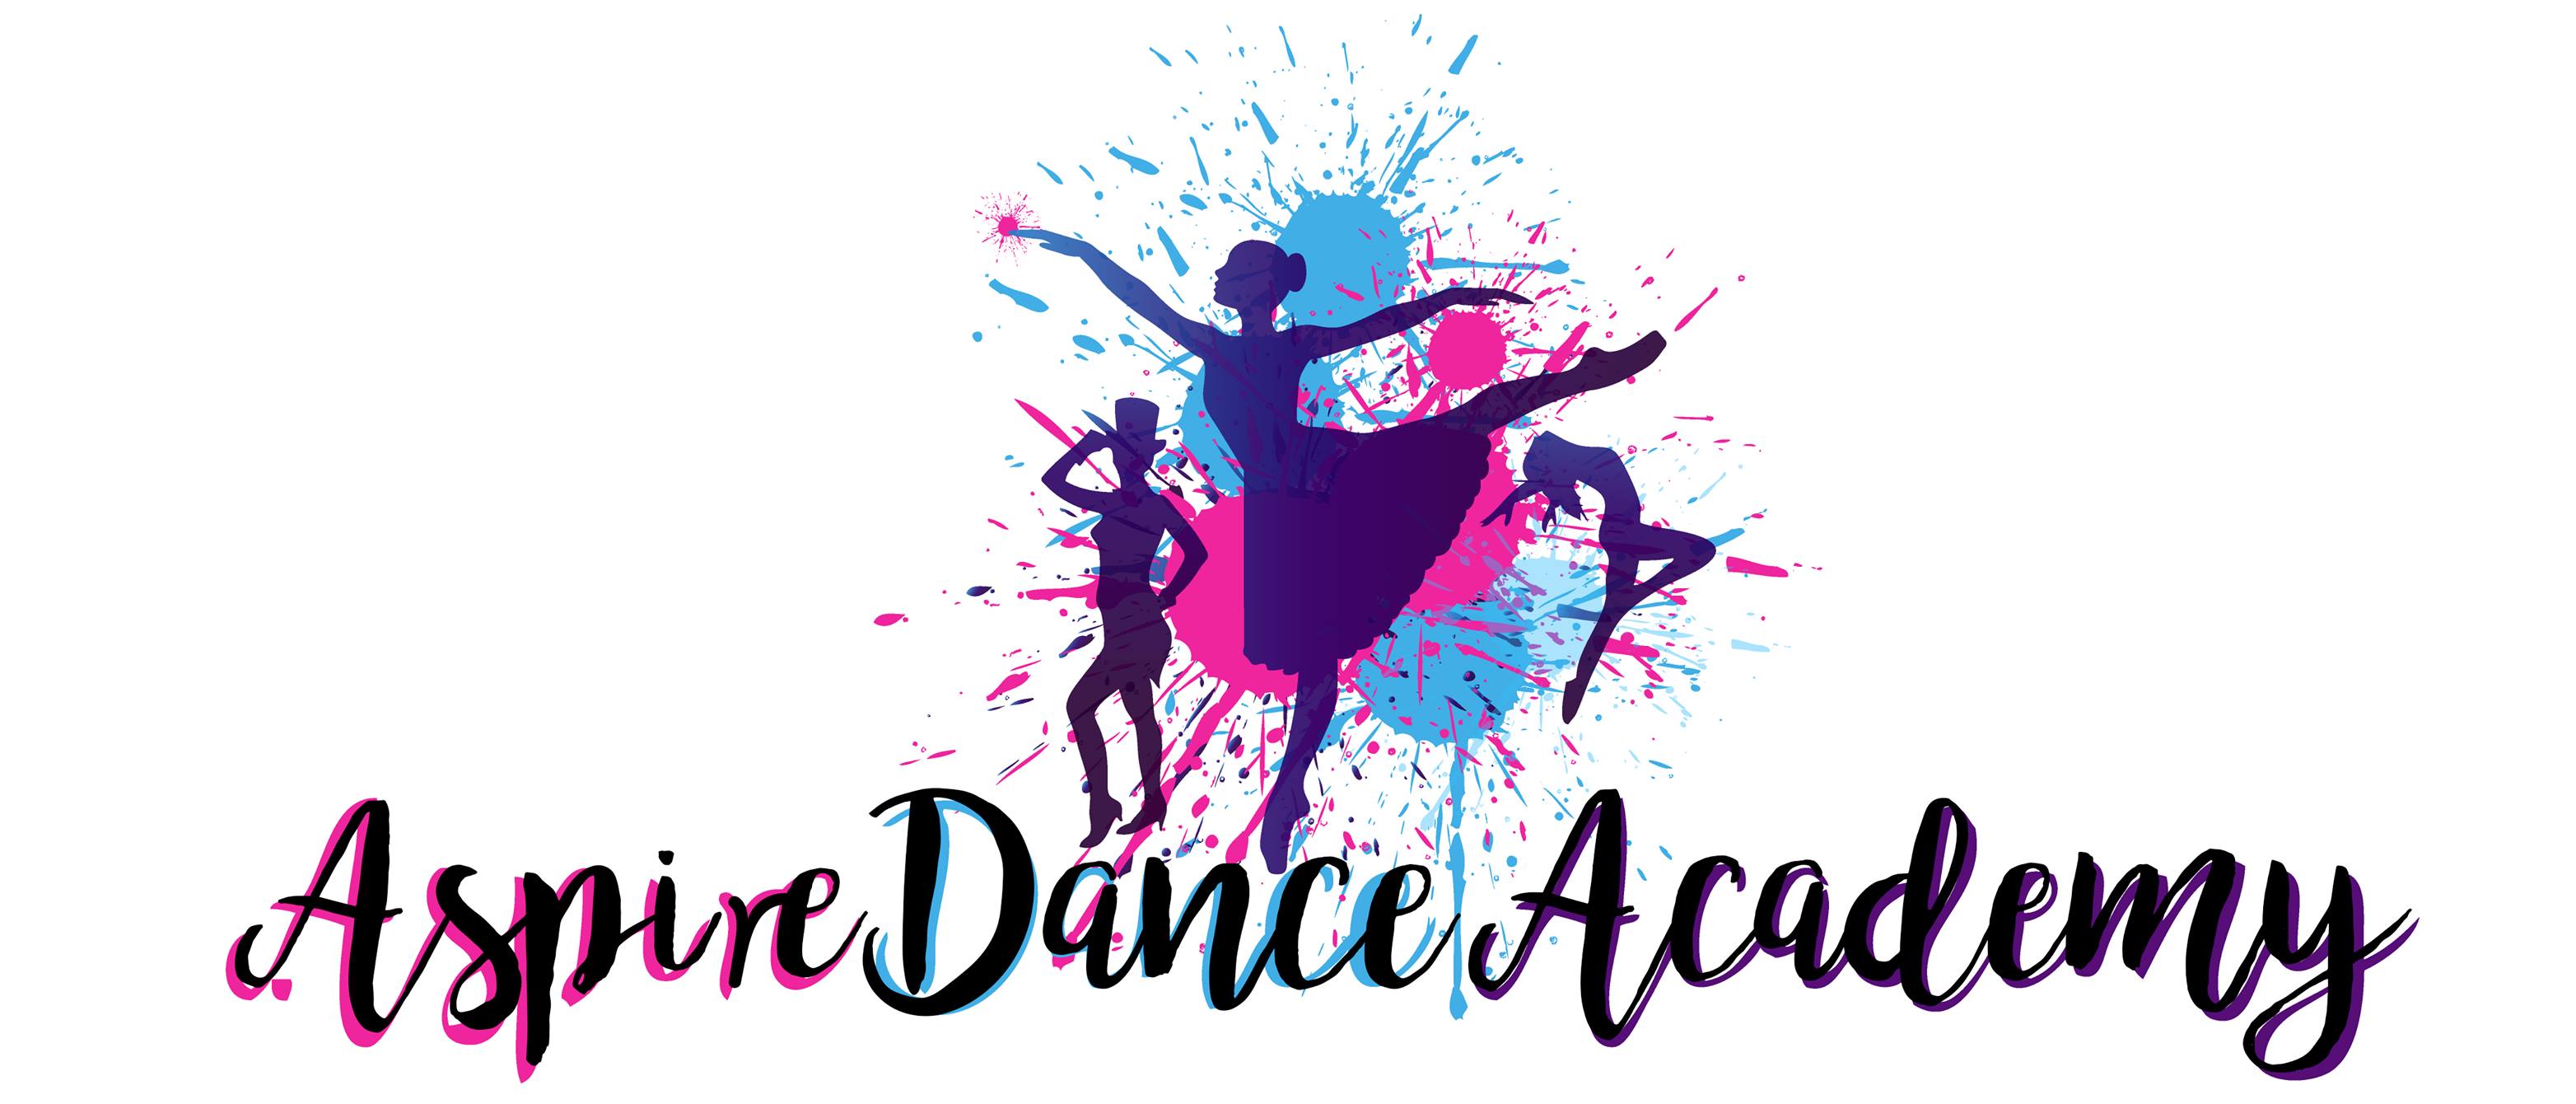 Aspire Dance Academy Logo